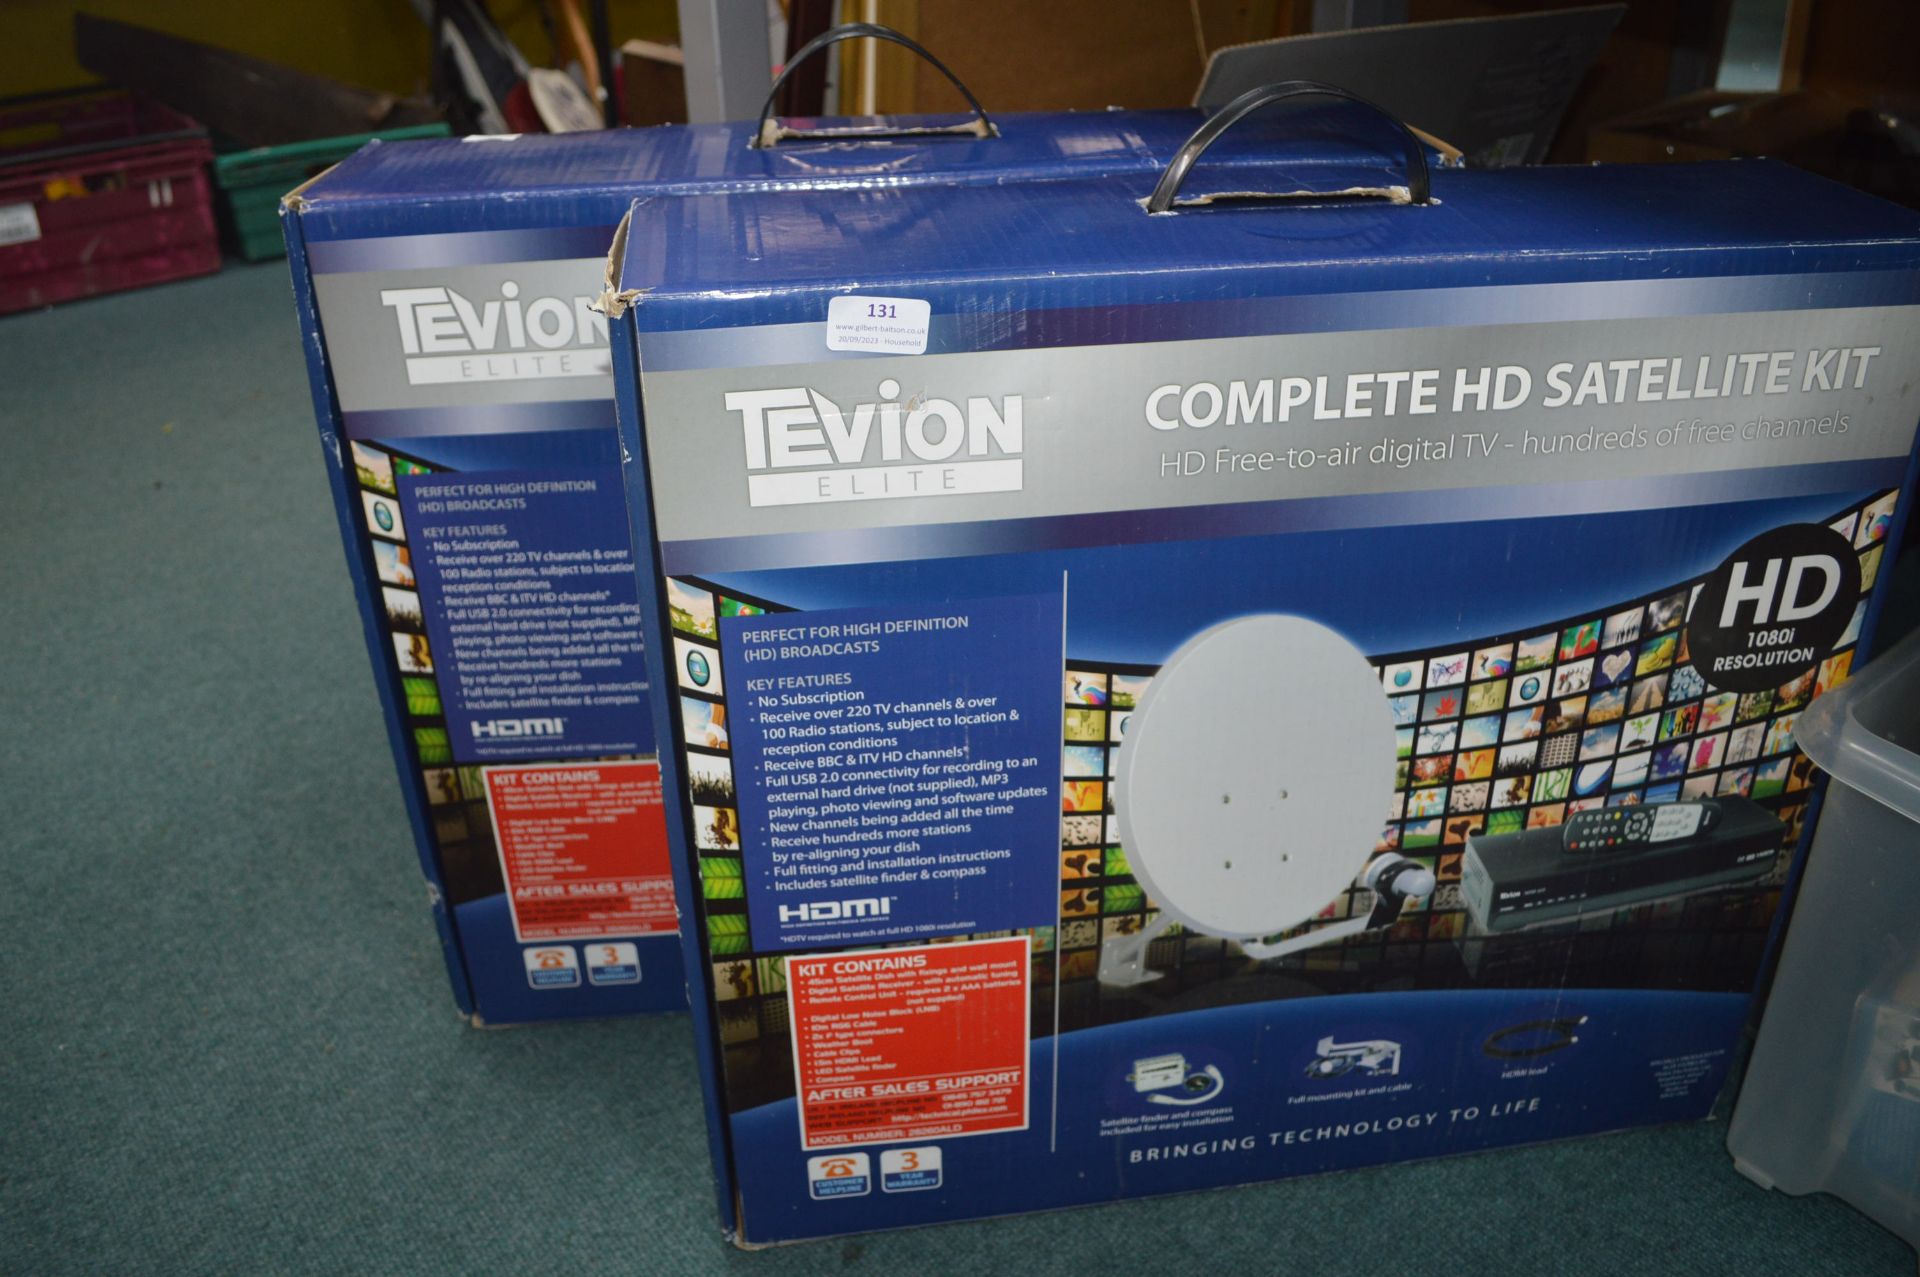 Two Tevion Complete HD Satellite Kits